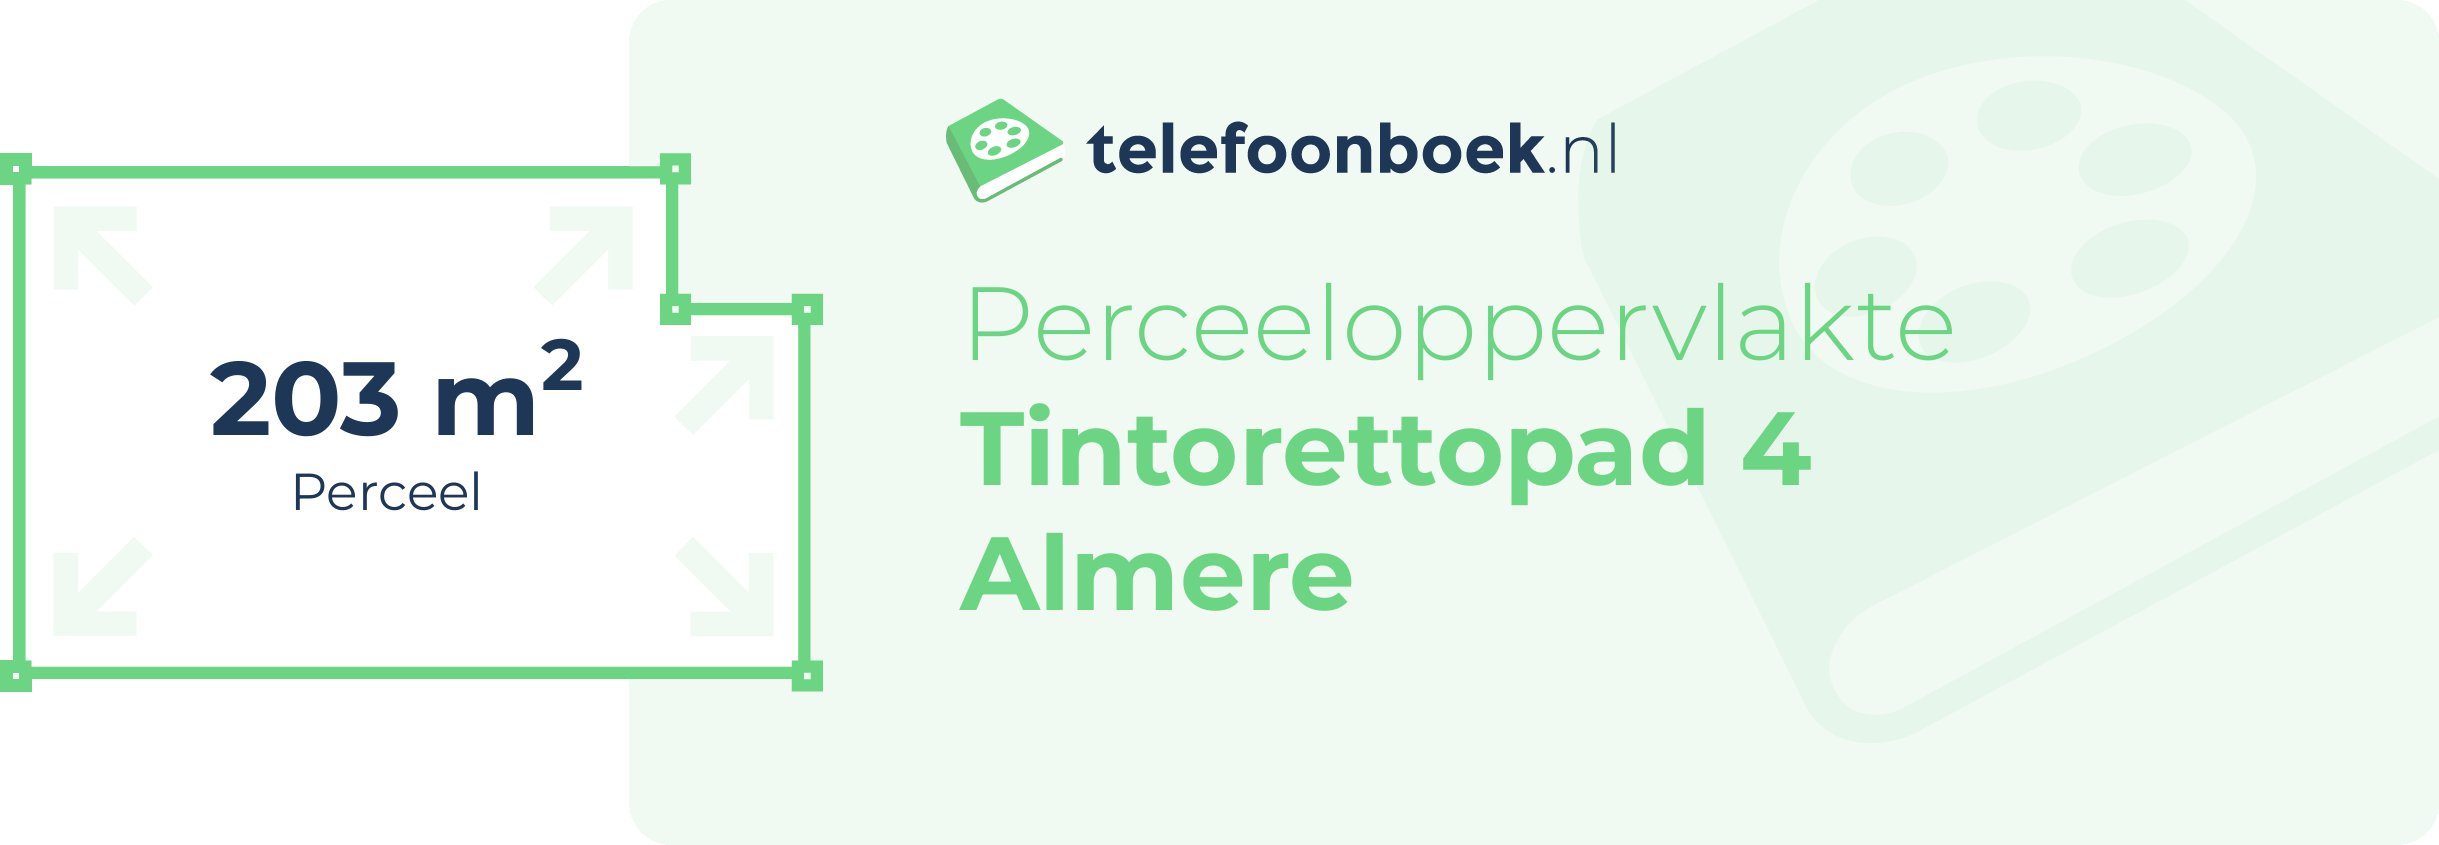 Perceeloppervlakte Tintorettopad 4 Almere